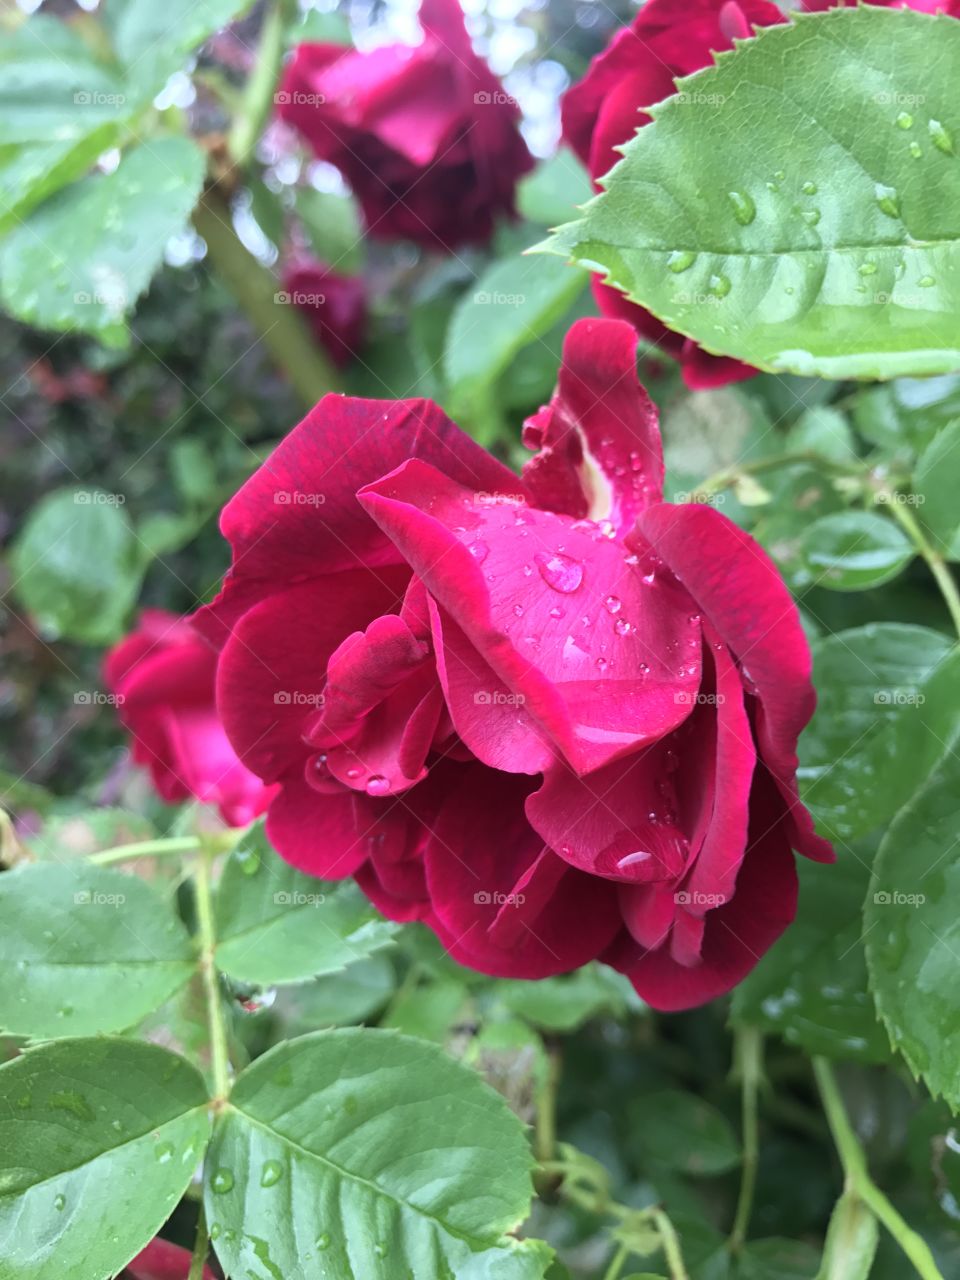 Roses in the rain ☔️ 